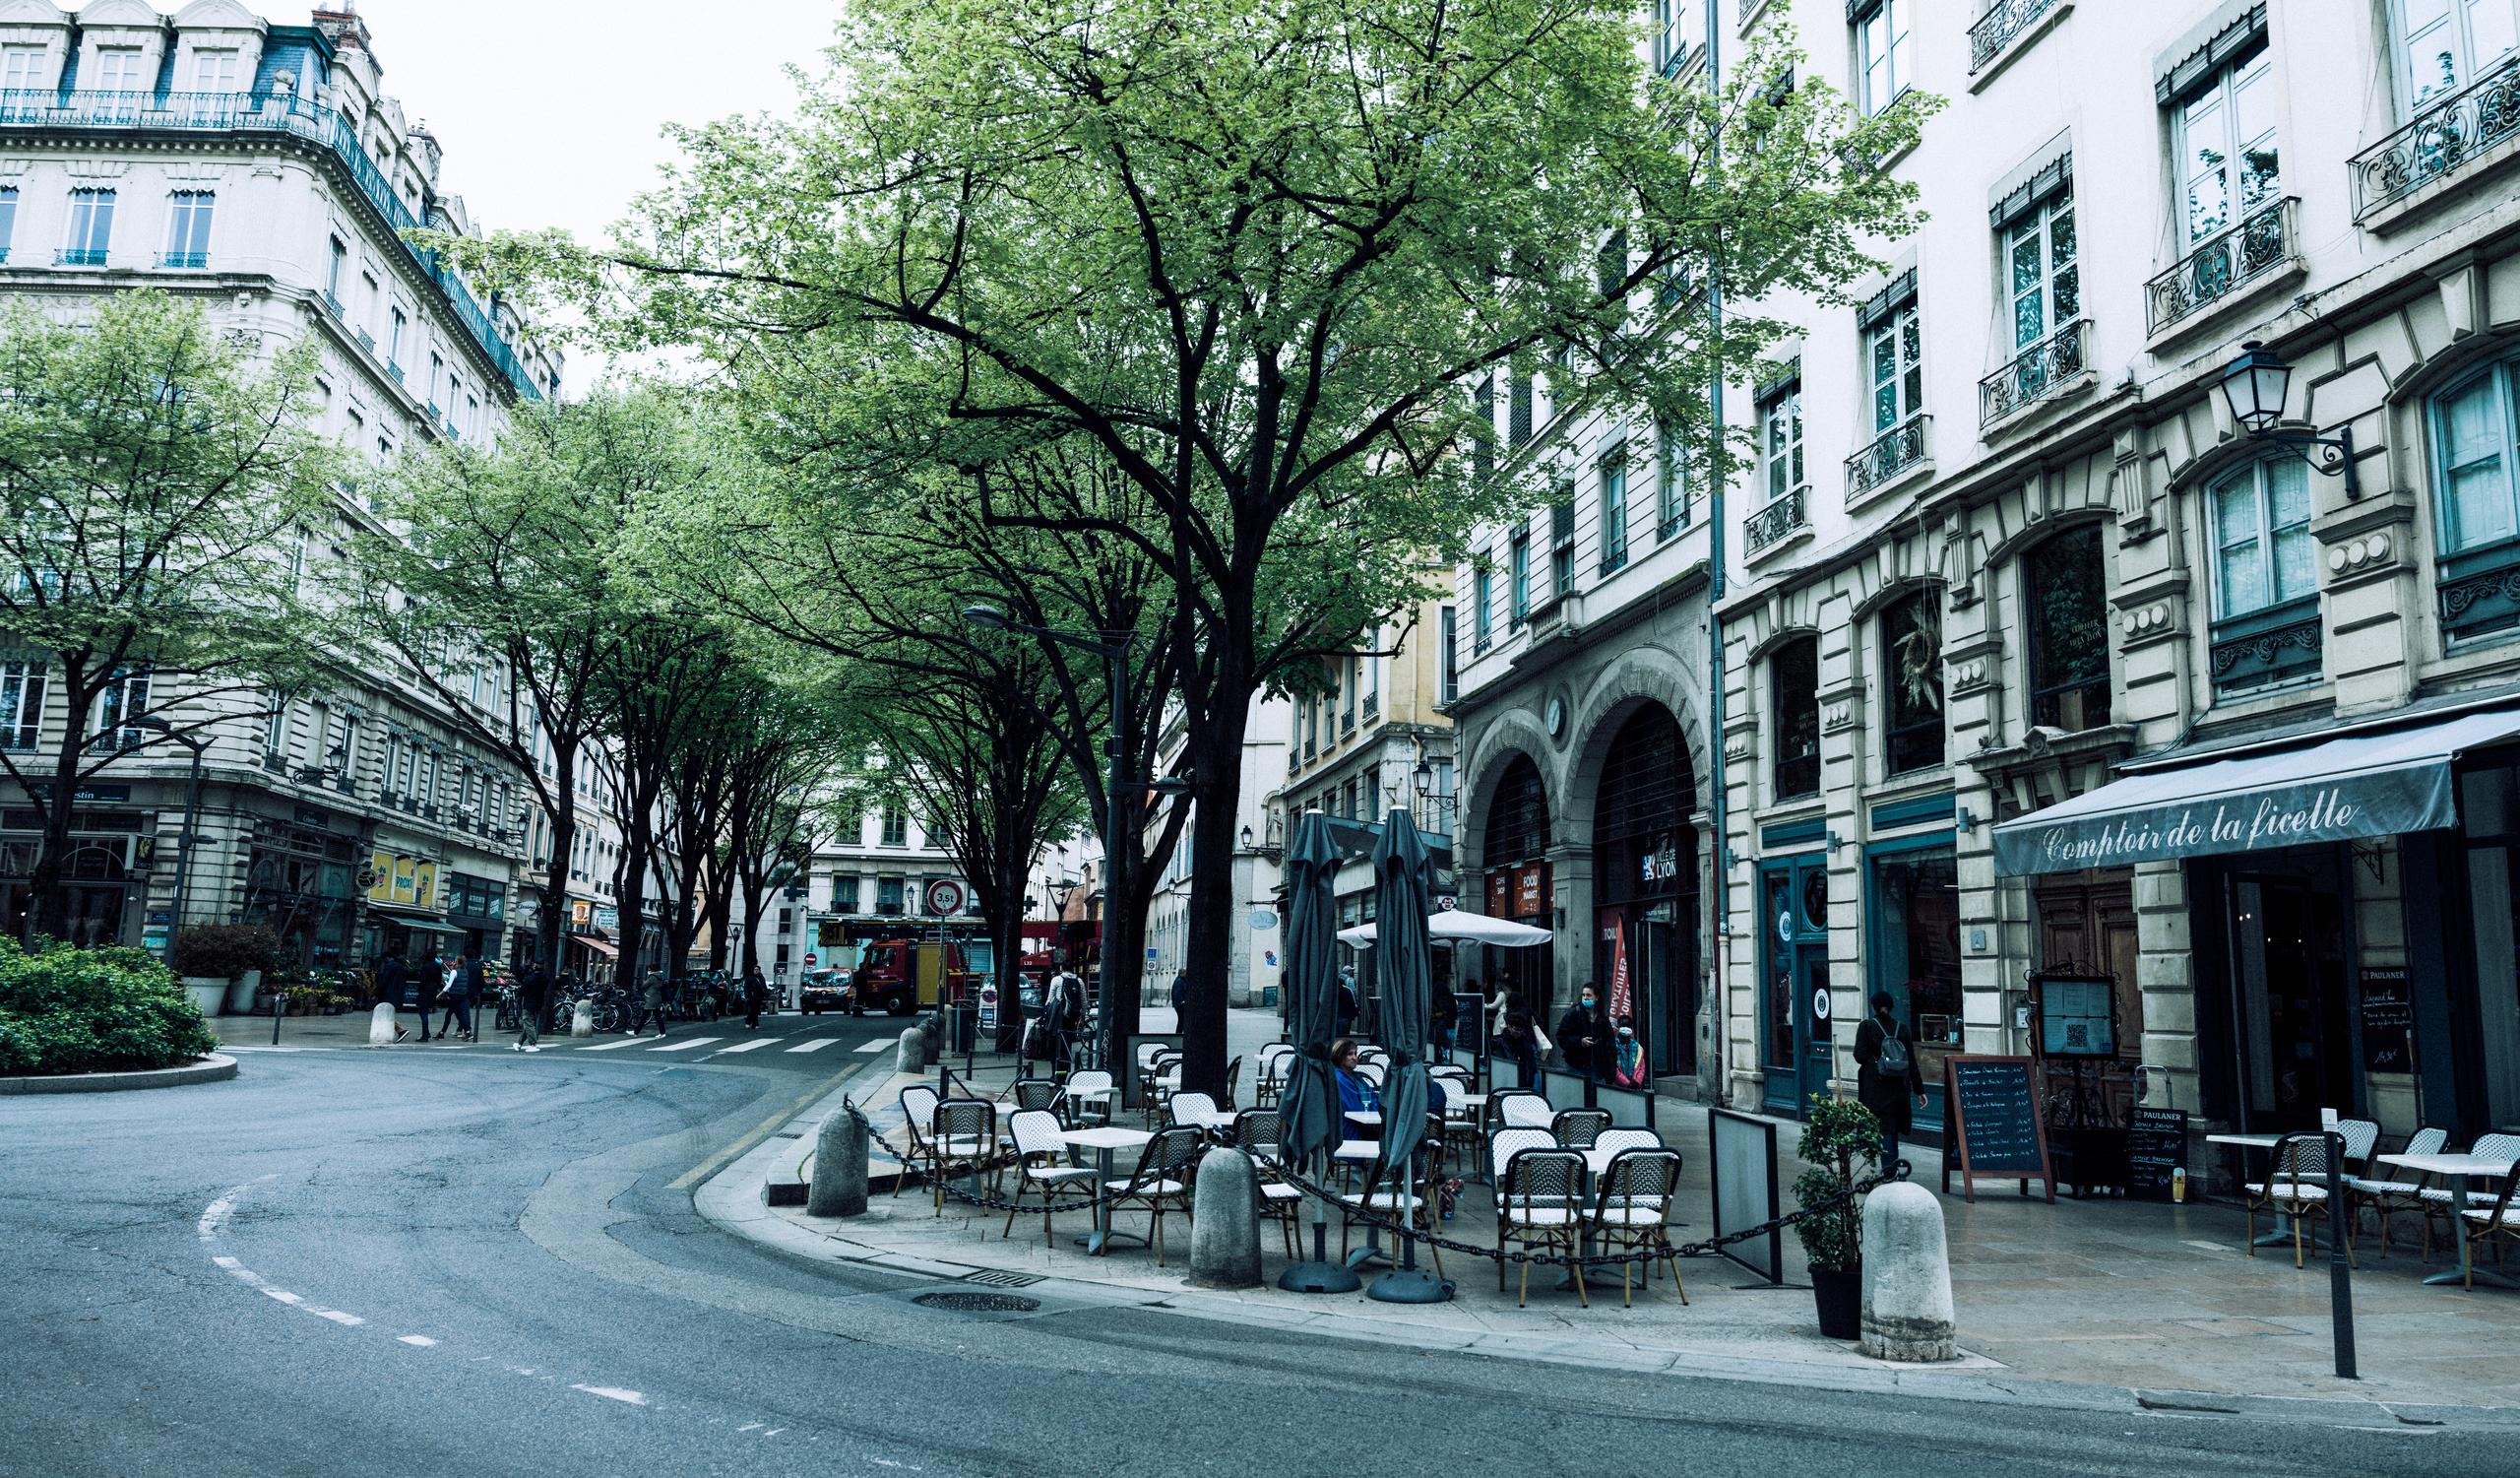 Street view of Lyon, France